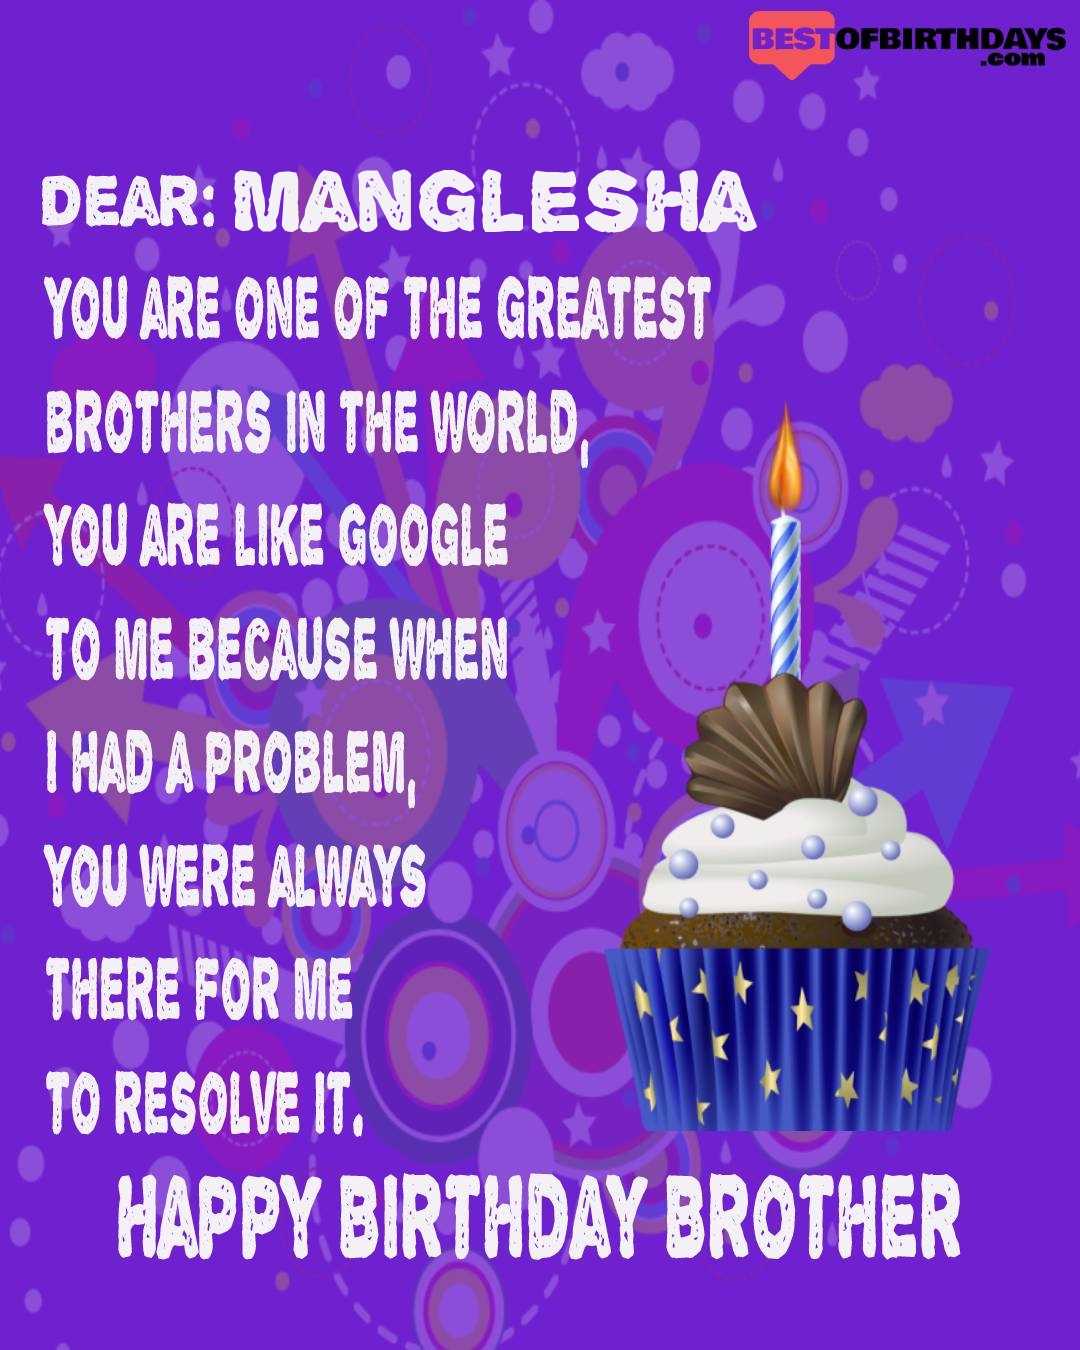 Happy birthday manglesha bhai brother bro